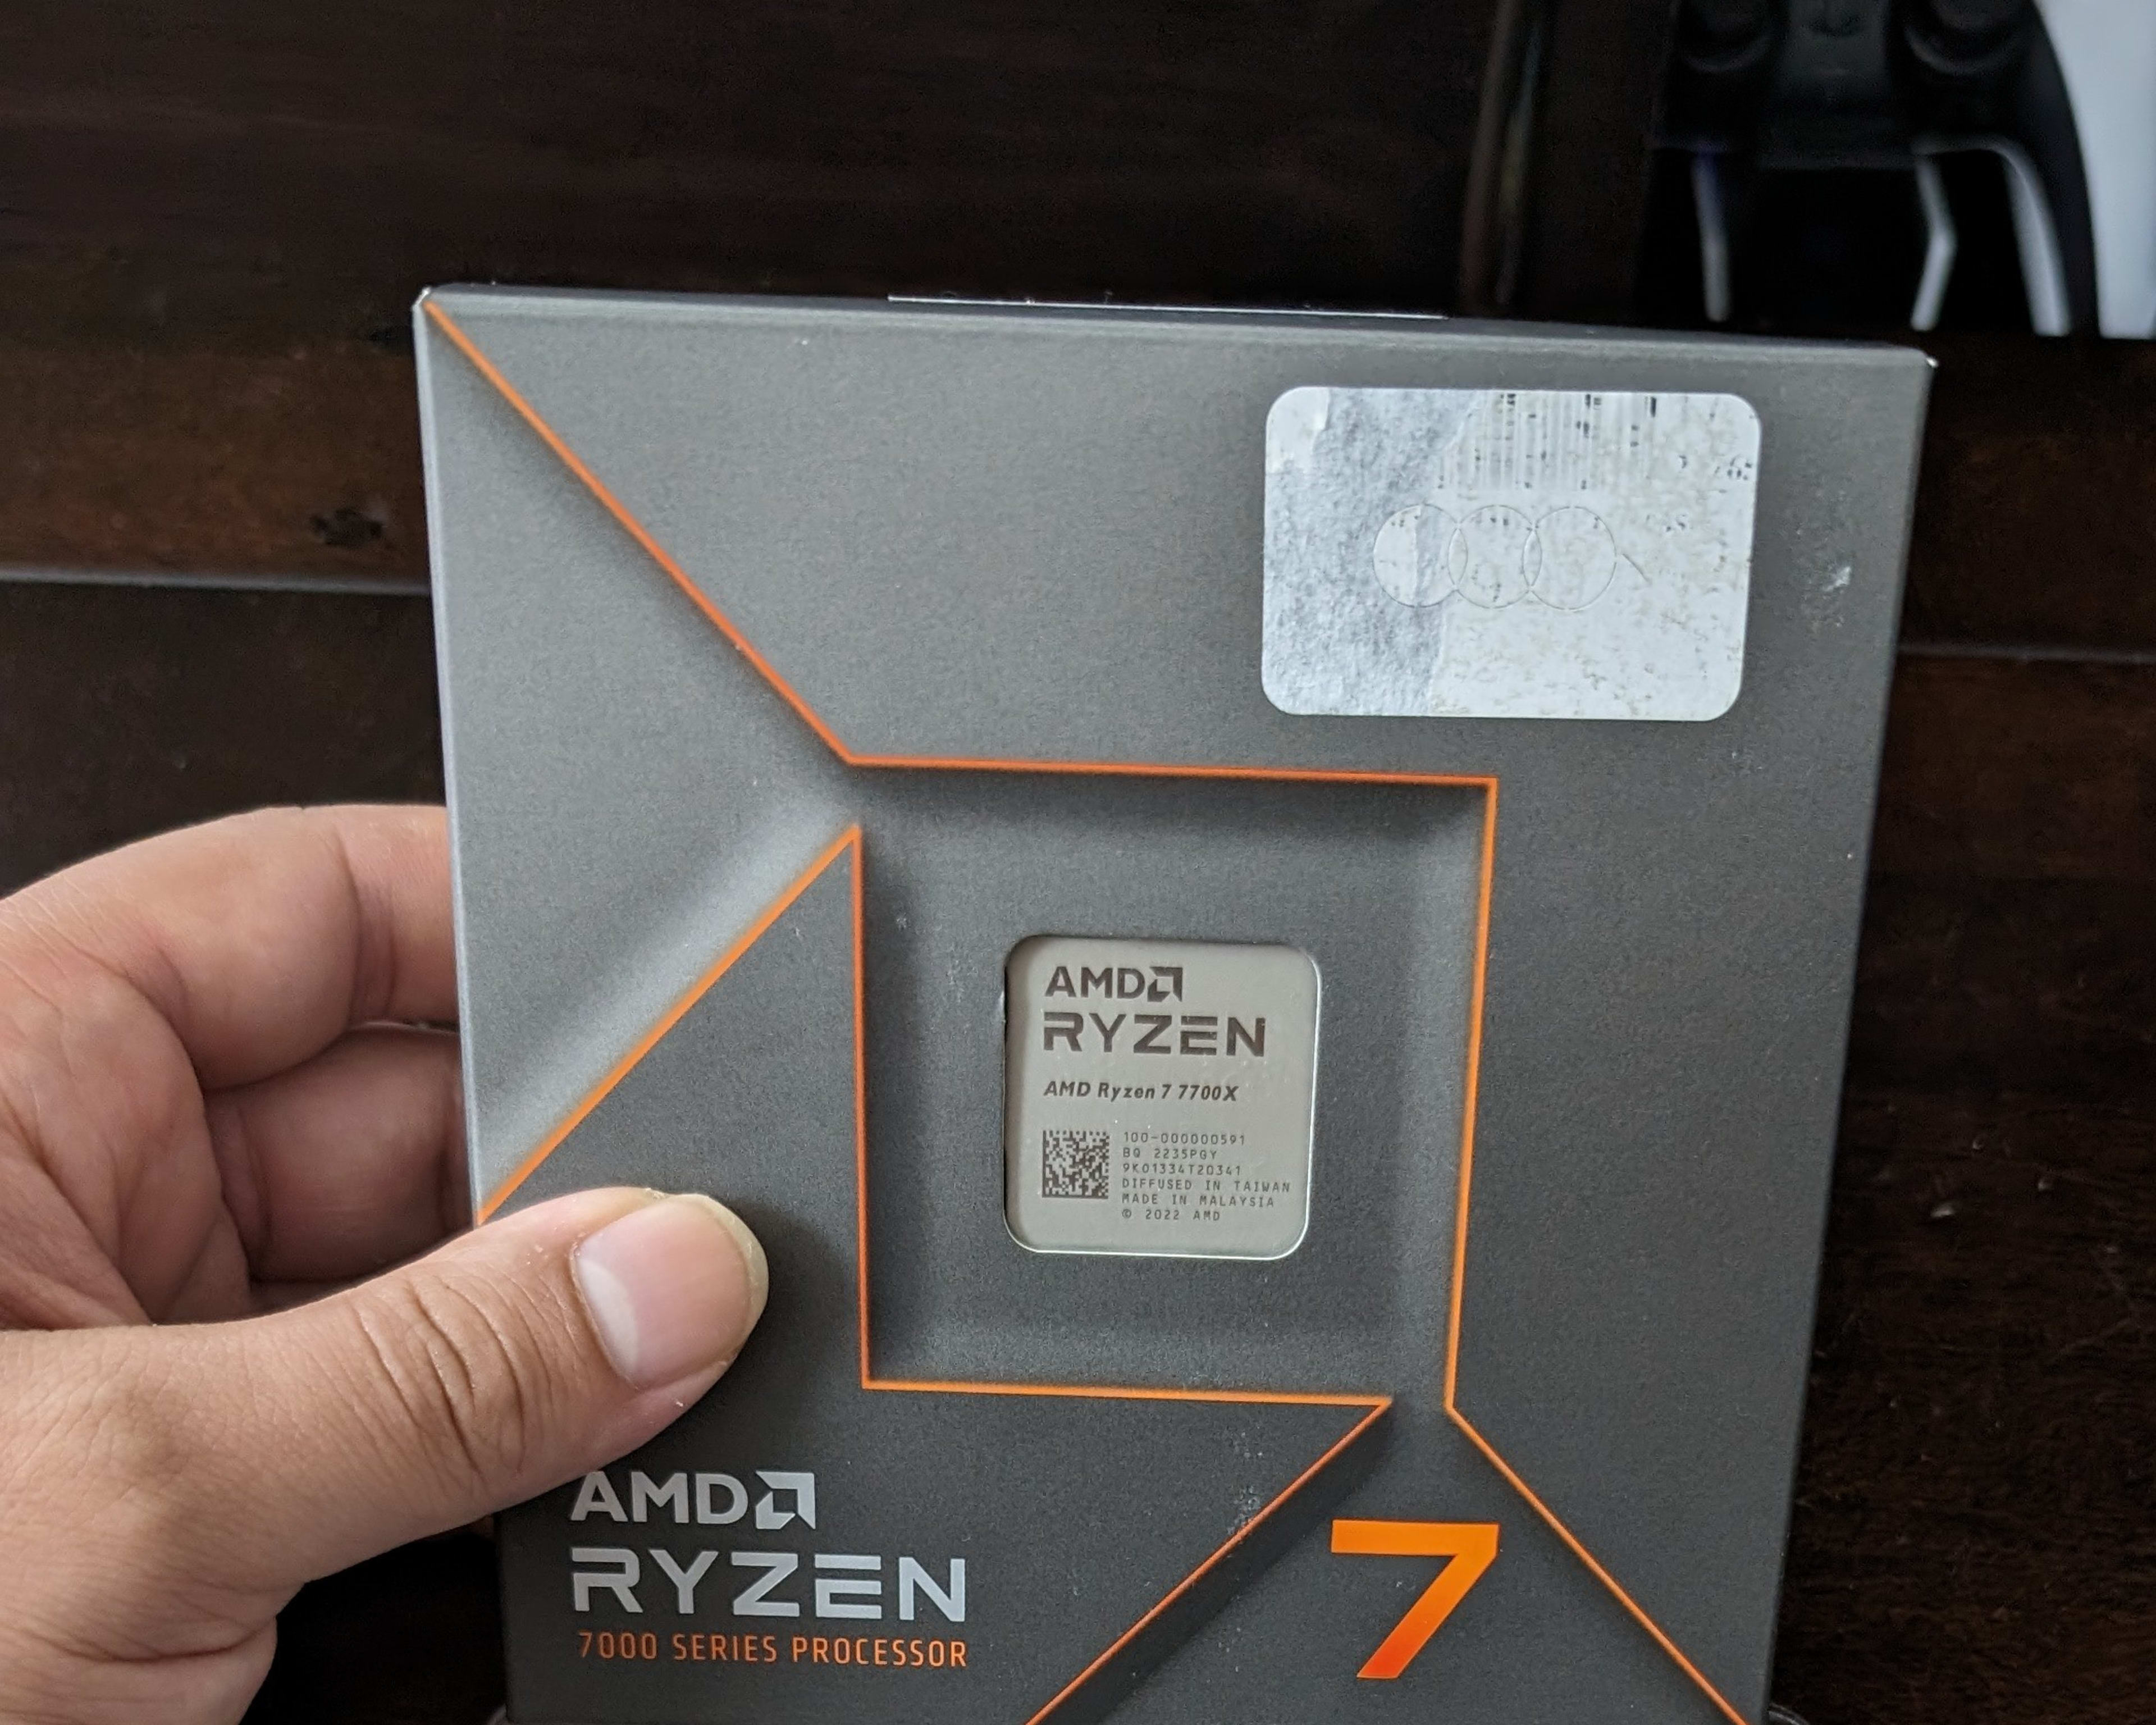 Ryzen 77700x CPU